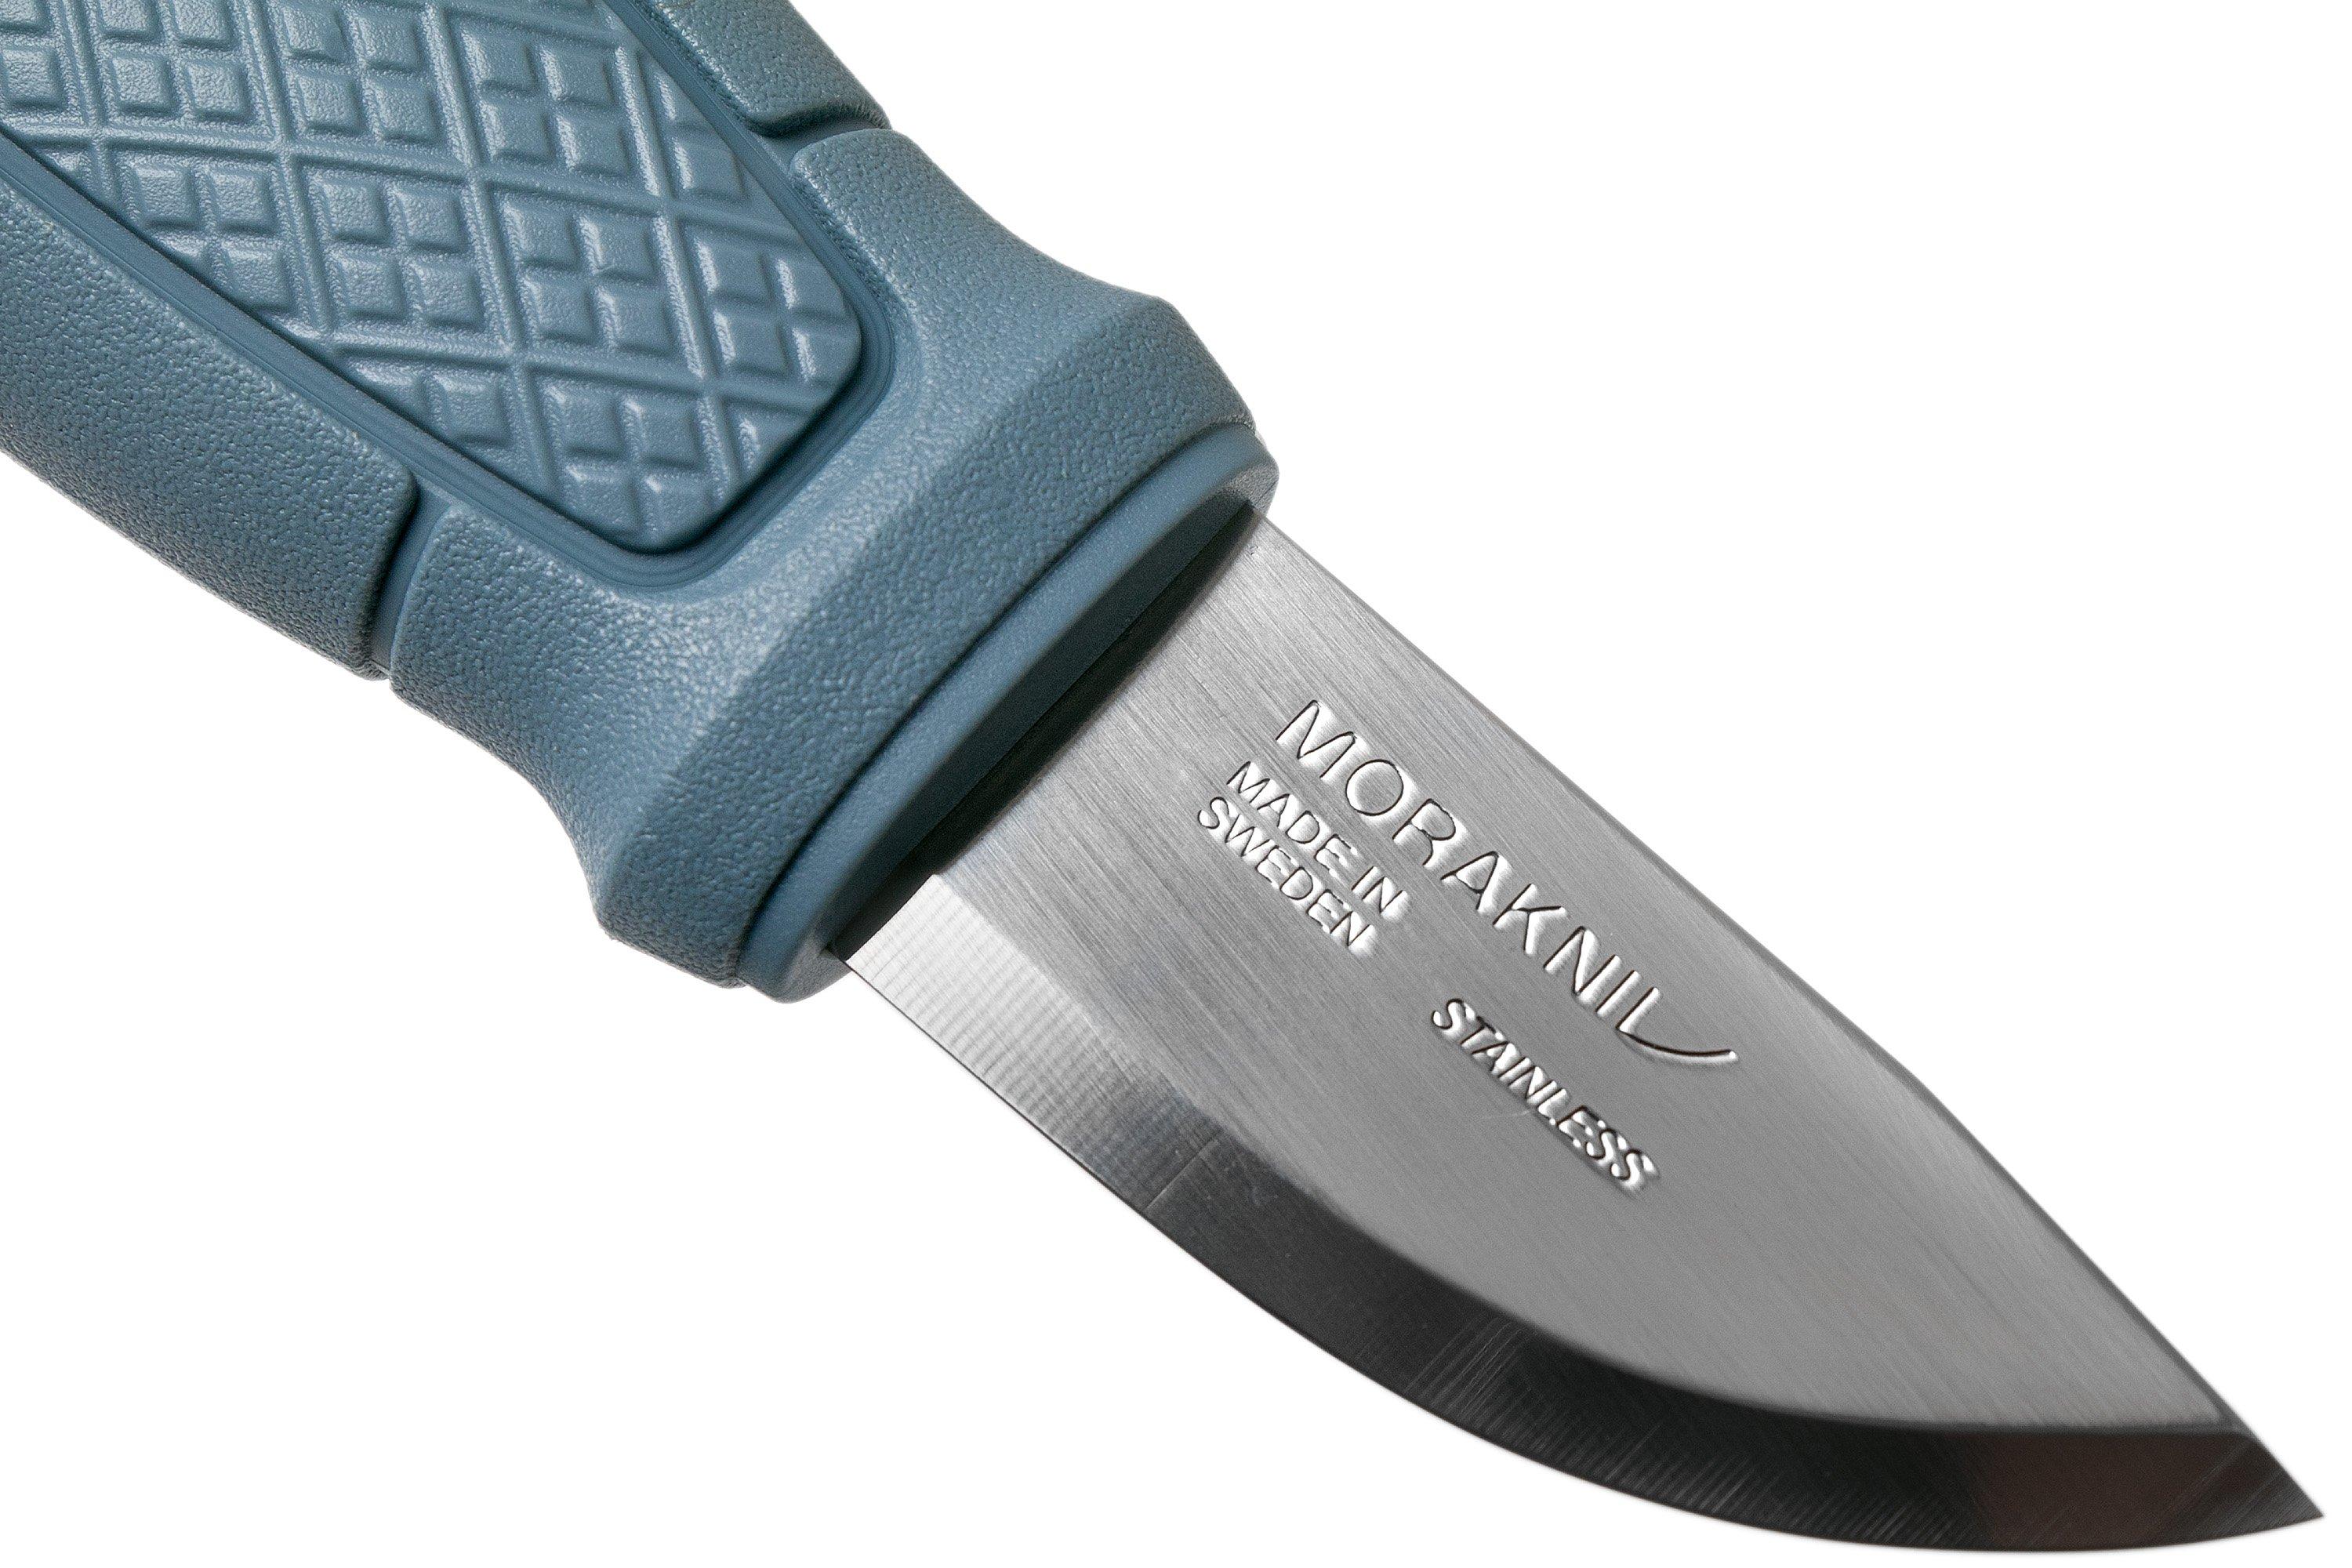  Morakniv Eldris Light Duty Stainless Steel Outdoor Knife With  Sheath, 2.3 Inch : Sports & Outdoors